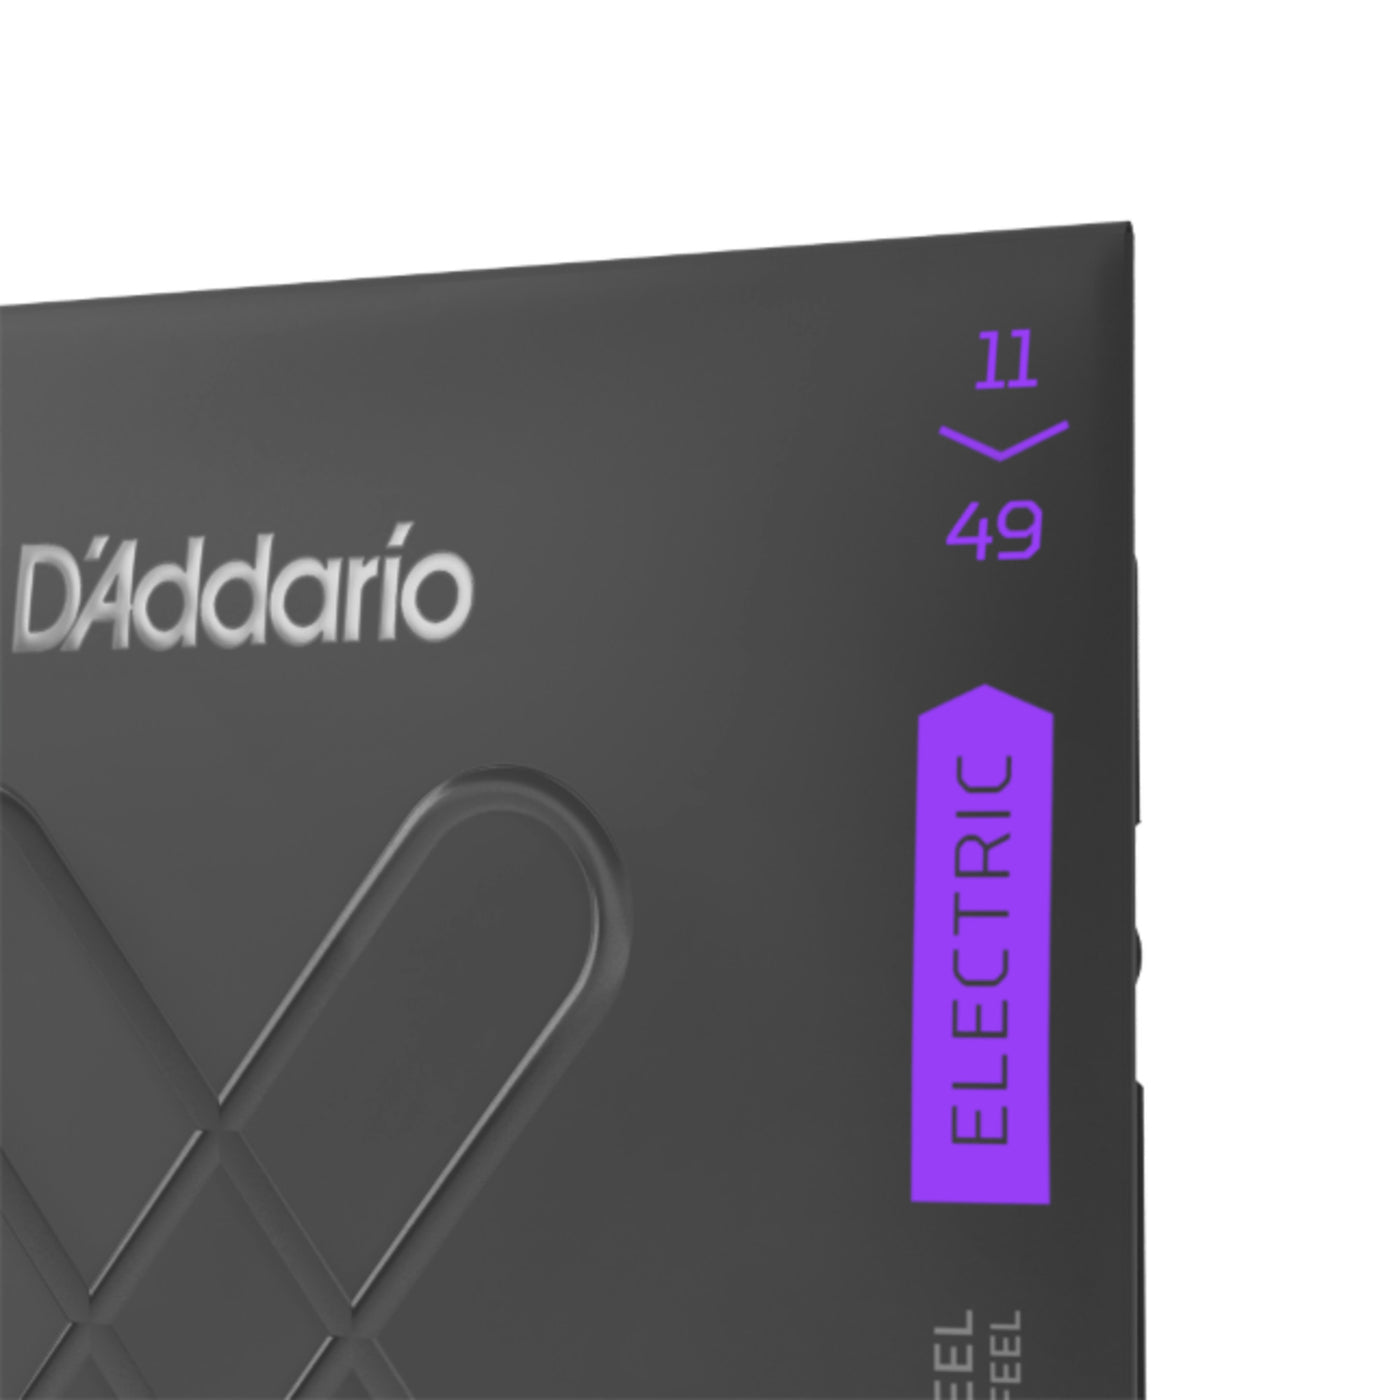 D'Addario XT Nickel Coated Electric Guitar Strings, Medium, 11-49 (XTE1149)